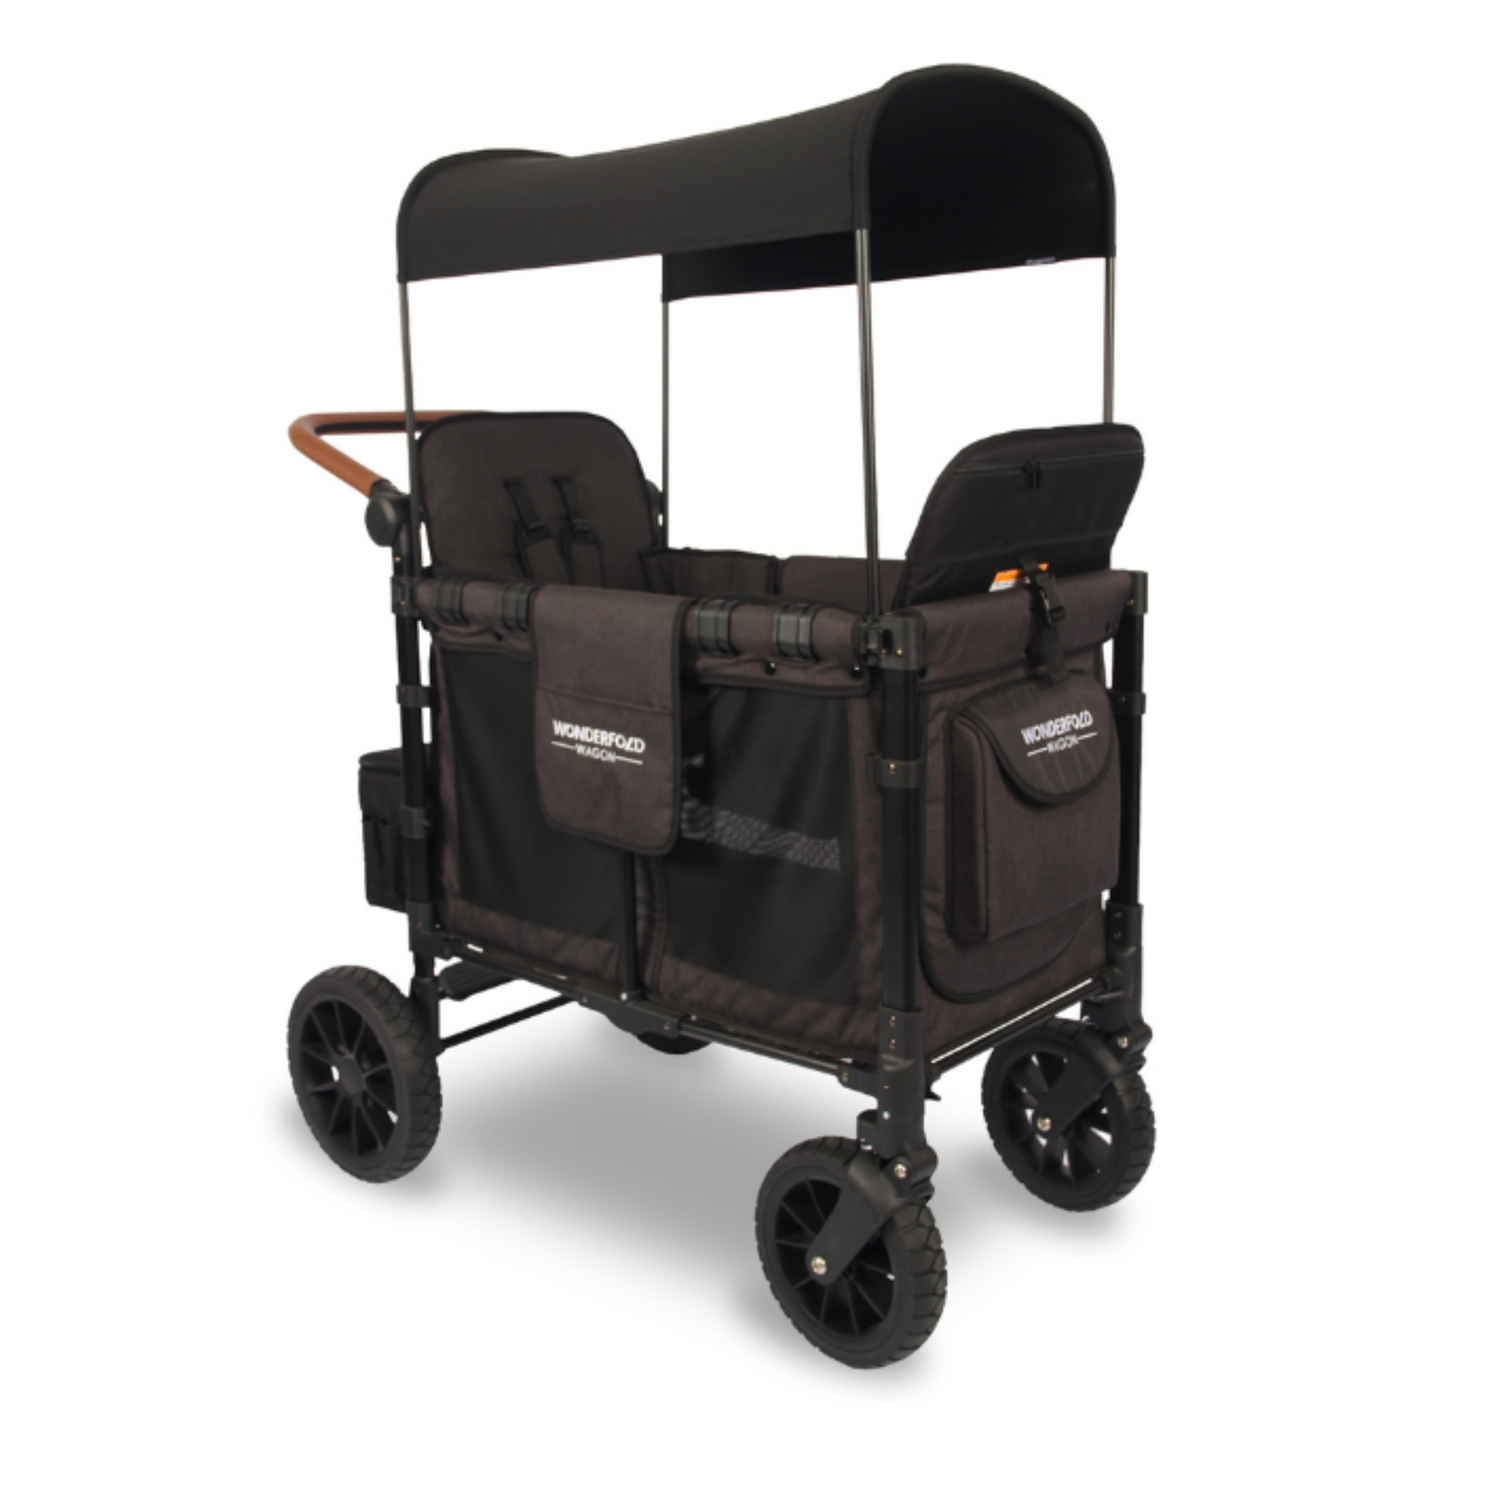 W2 Luxe Stroller Wagon - Volcanic Black - WonderFold Wagons Australia